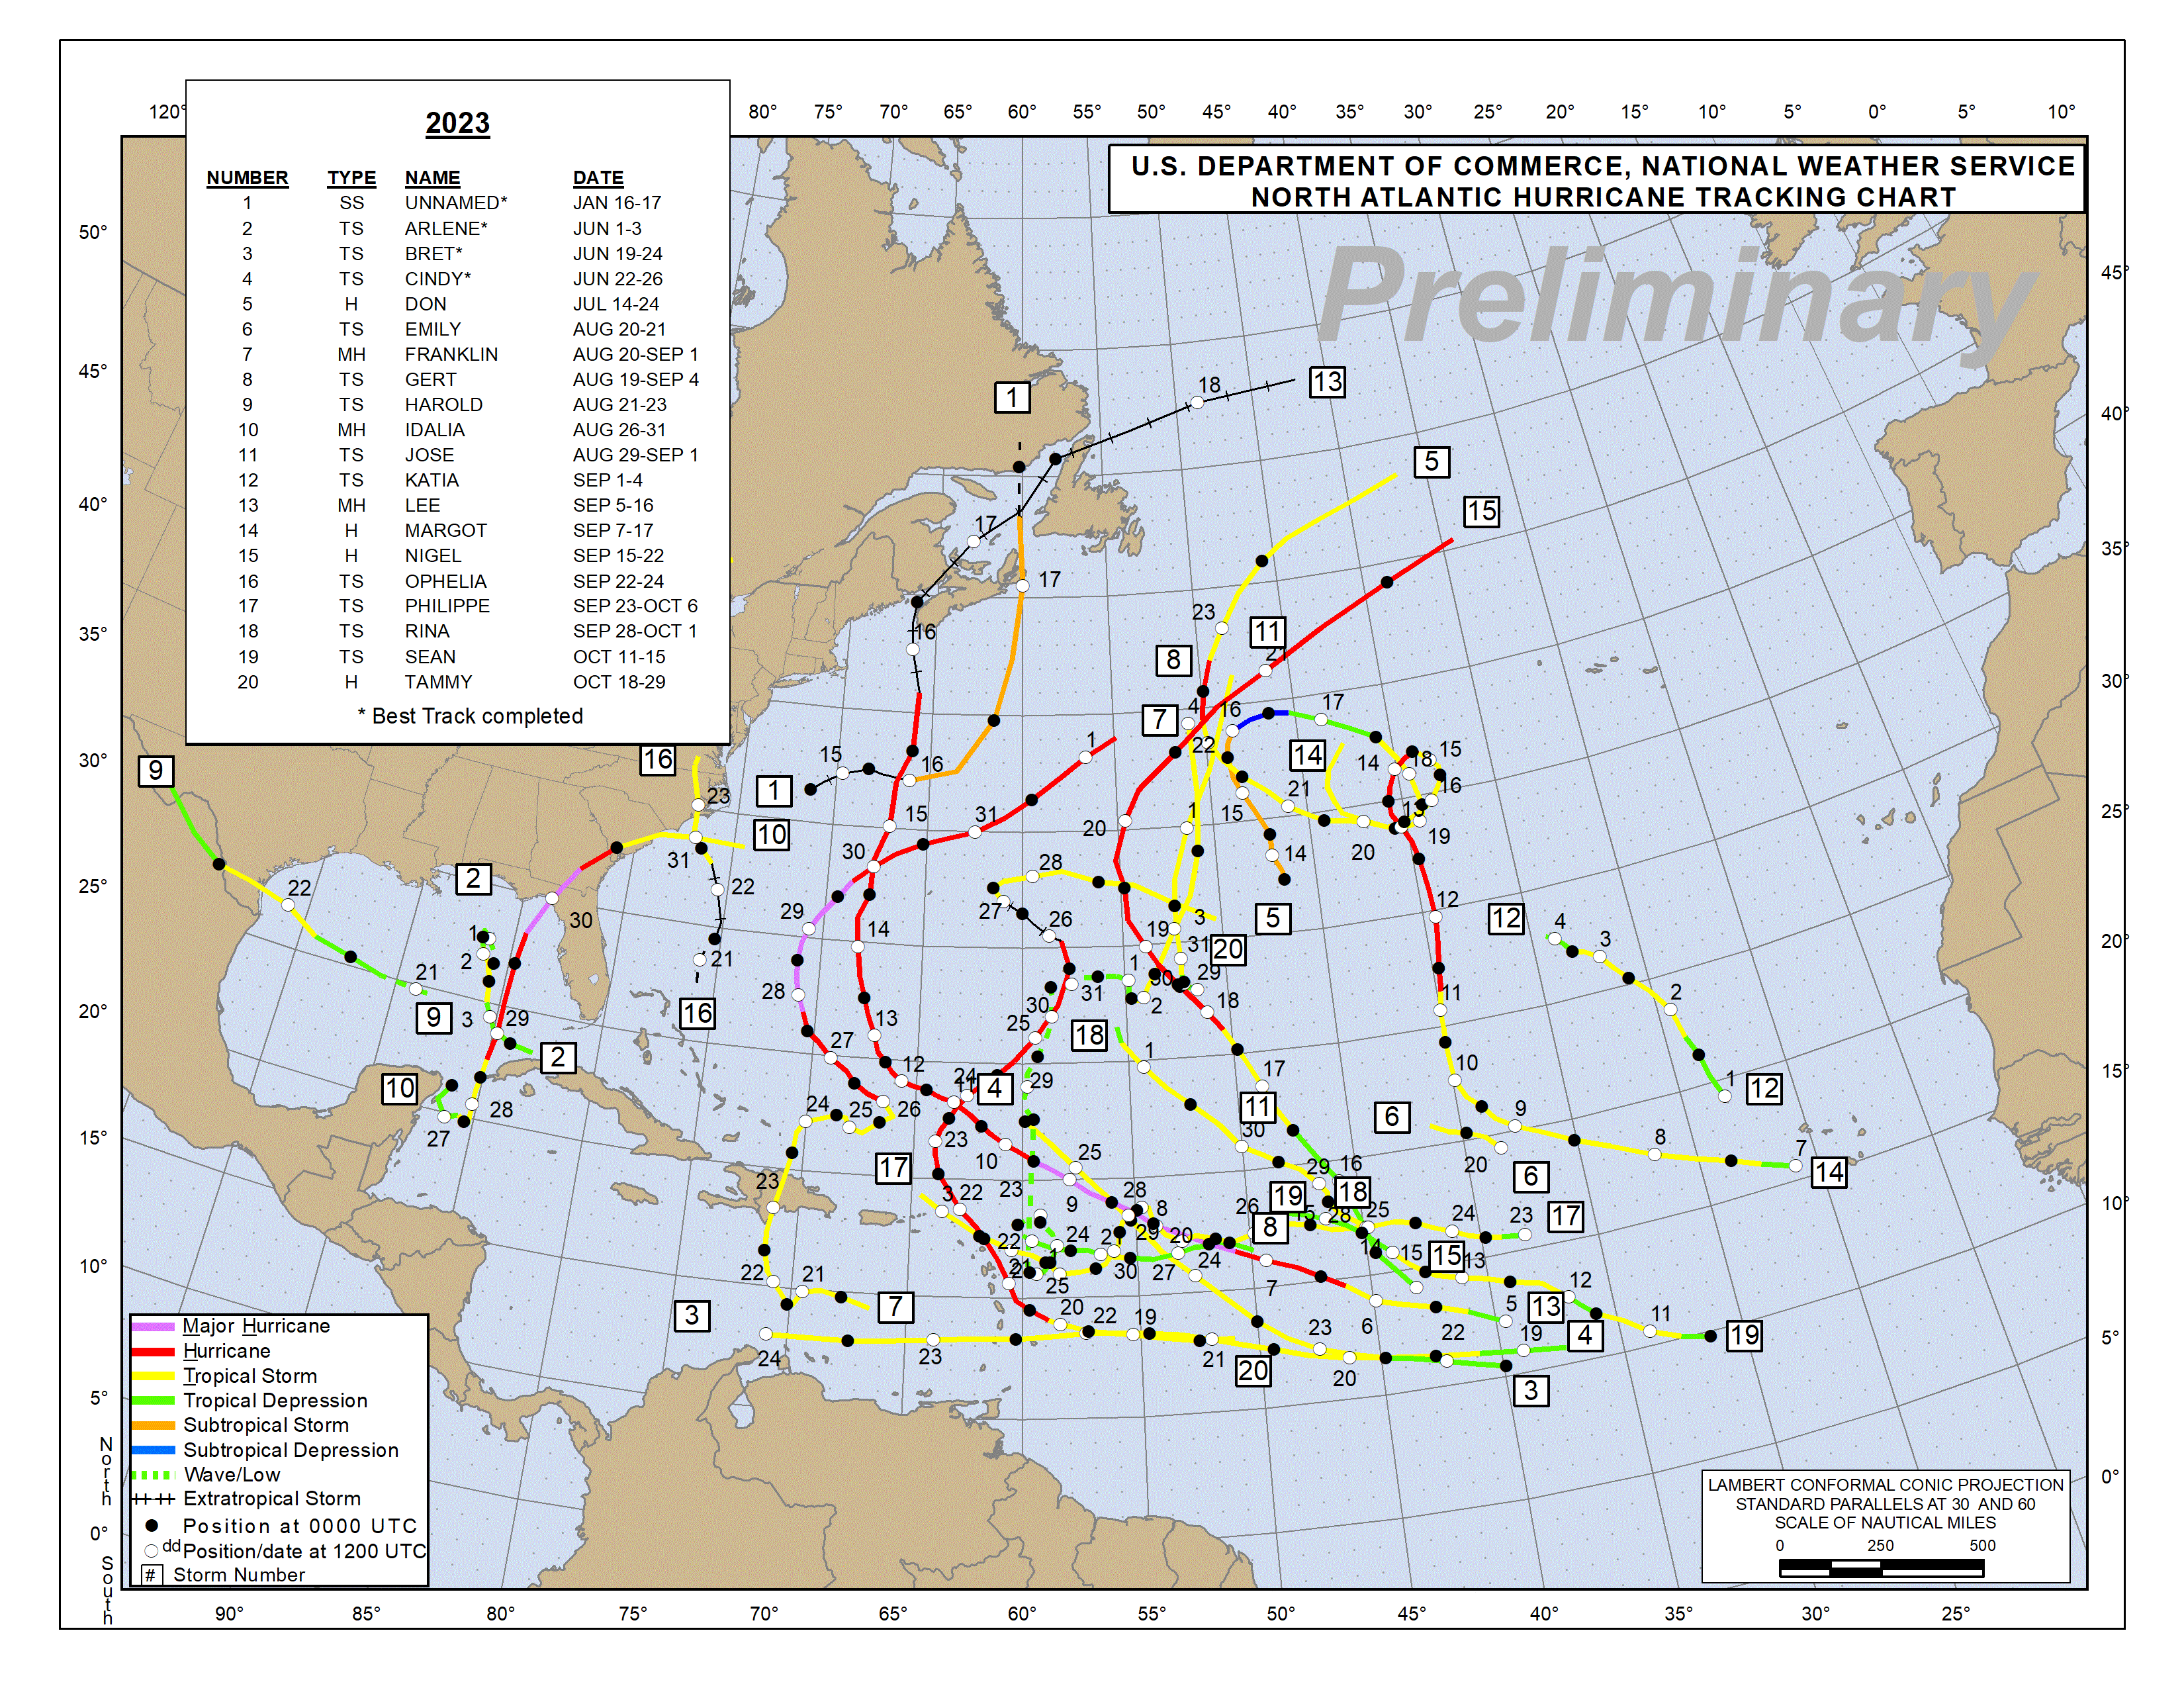 2017 Tropical Cyclone Tracks